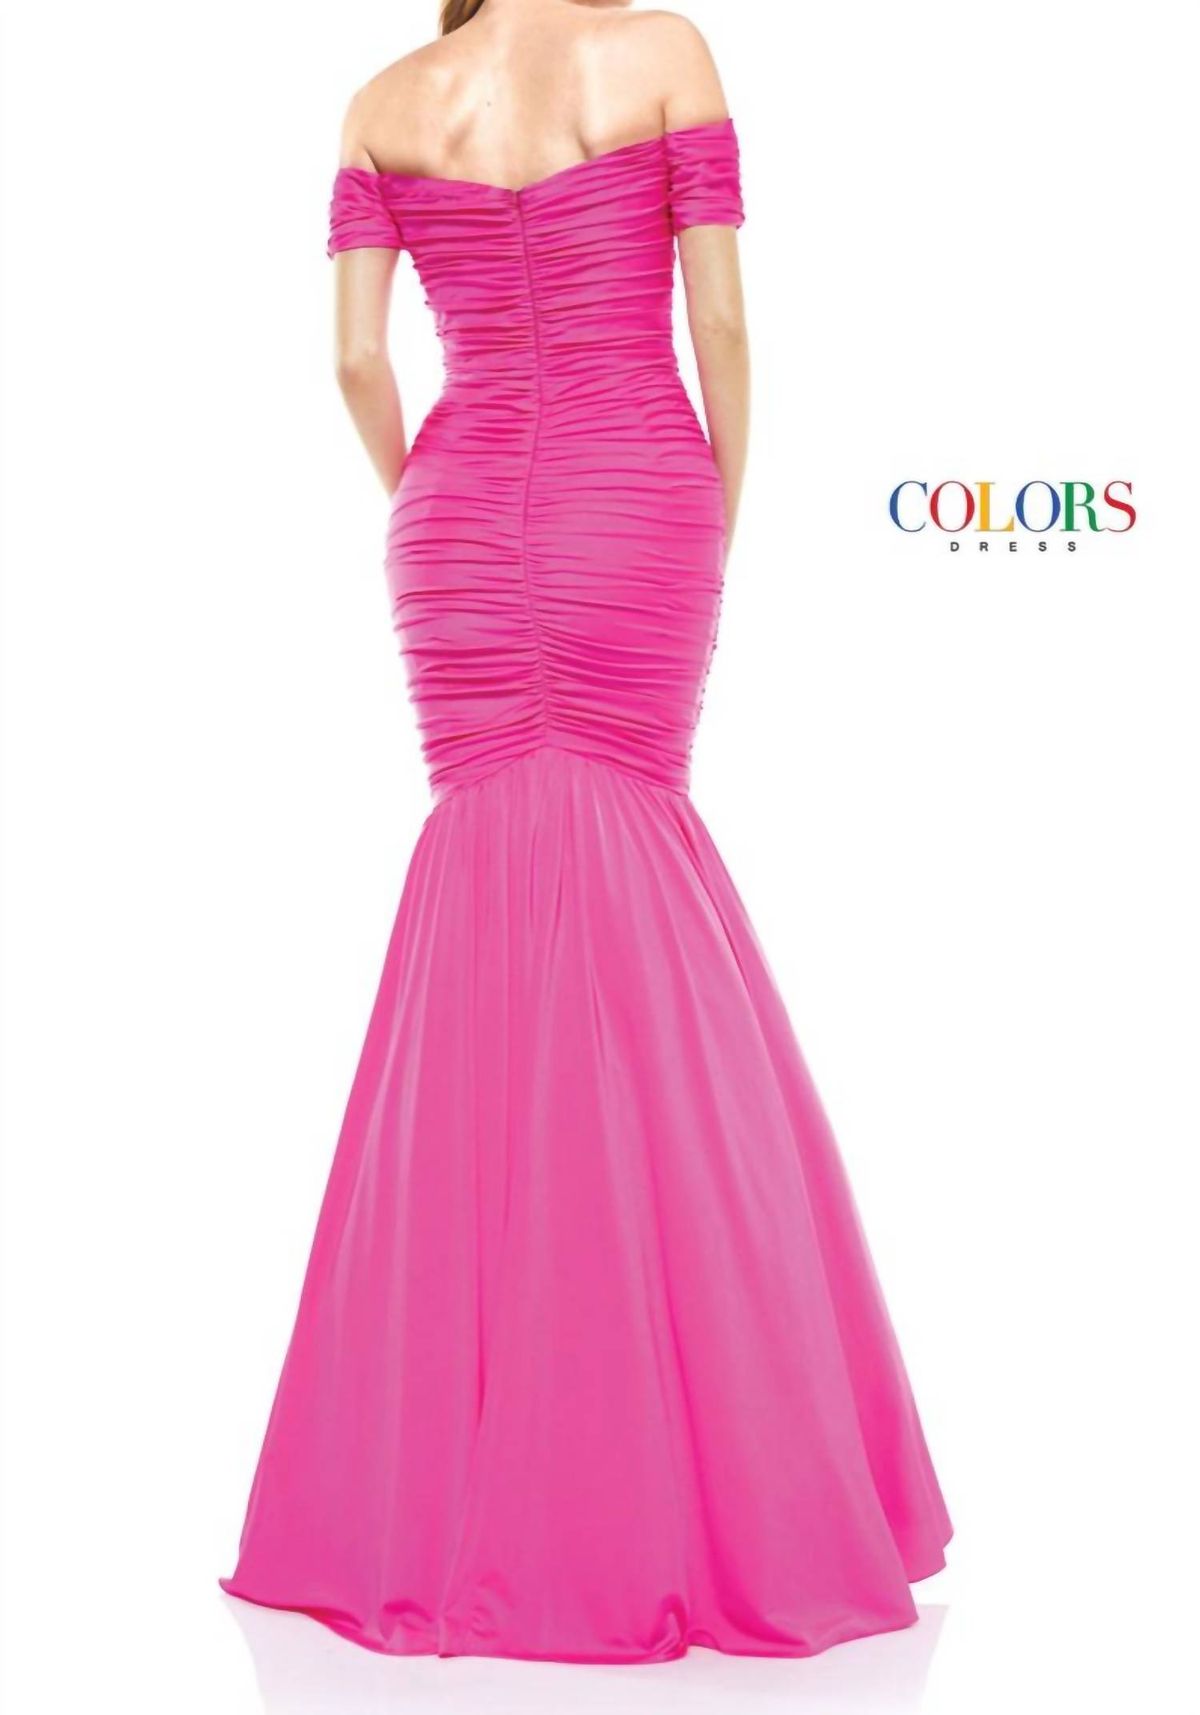 Ravishing Shocking Pink Dresses| Pink Dresses for Women| Pink Wedding Dress|  Dark Pink Dr… | Party wear dresses, Baby clothes girl dresses, Simple  pakistani dresses